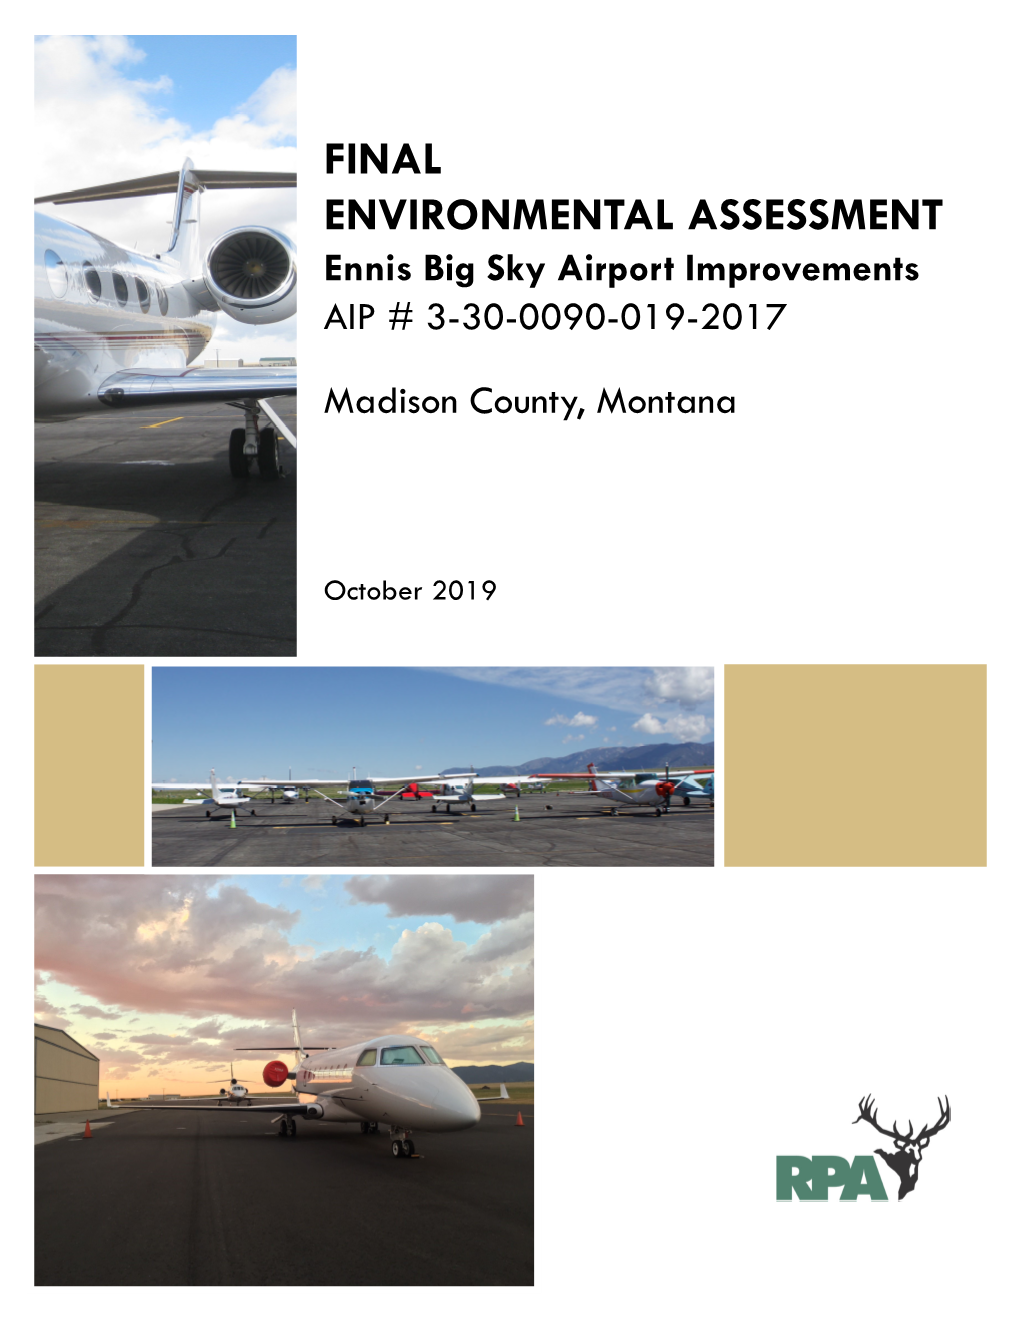 FINAL ENVIRONMENTAL ASSESSMENT Ennis Big Sky Airport Improvements AIP # 3-30-0090-019-2017